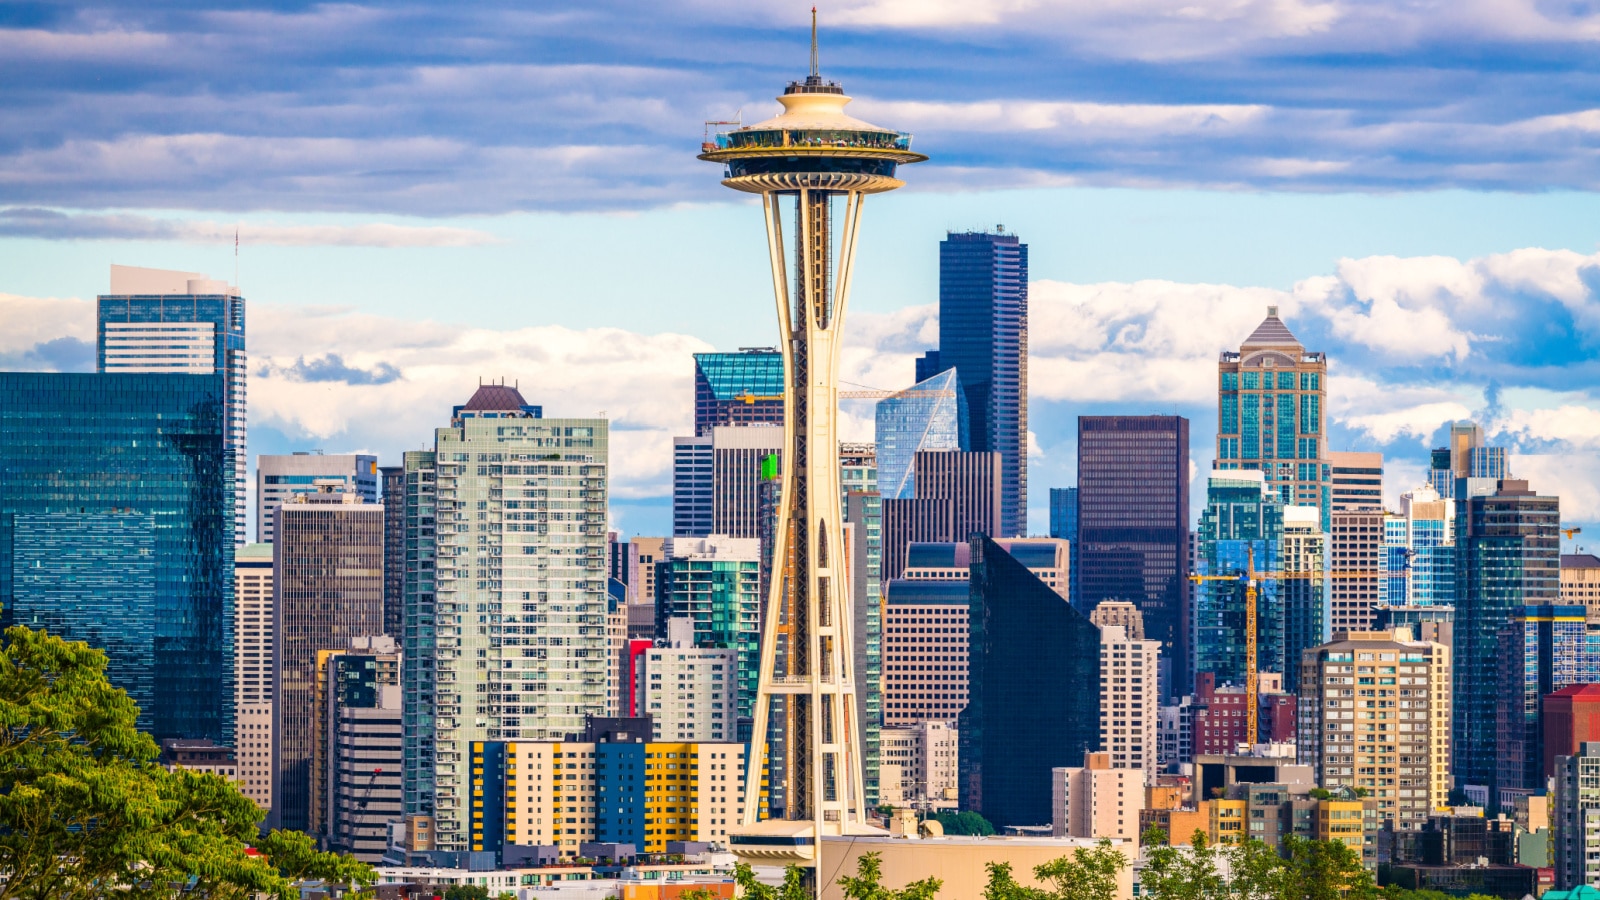 Seattle, Washington, USA downtown skyline.